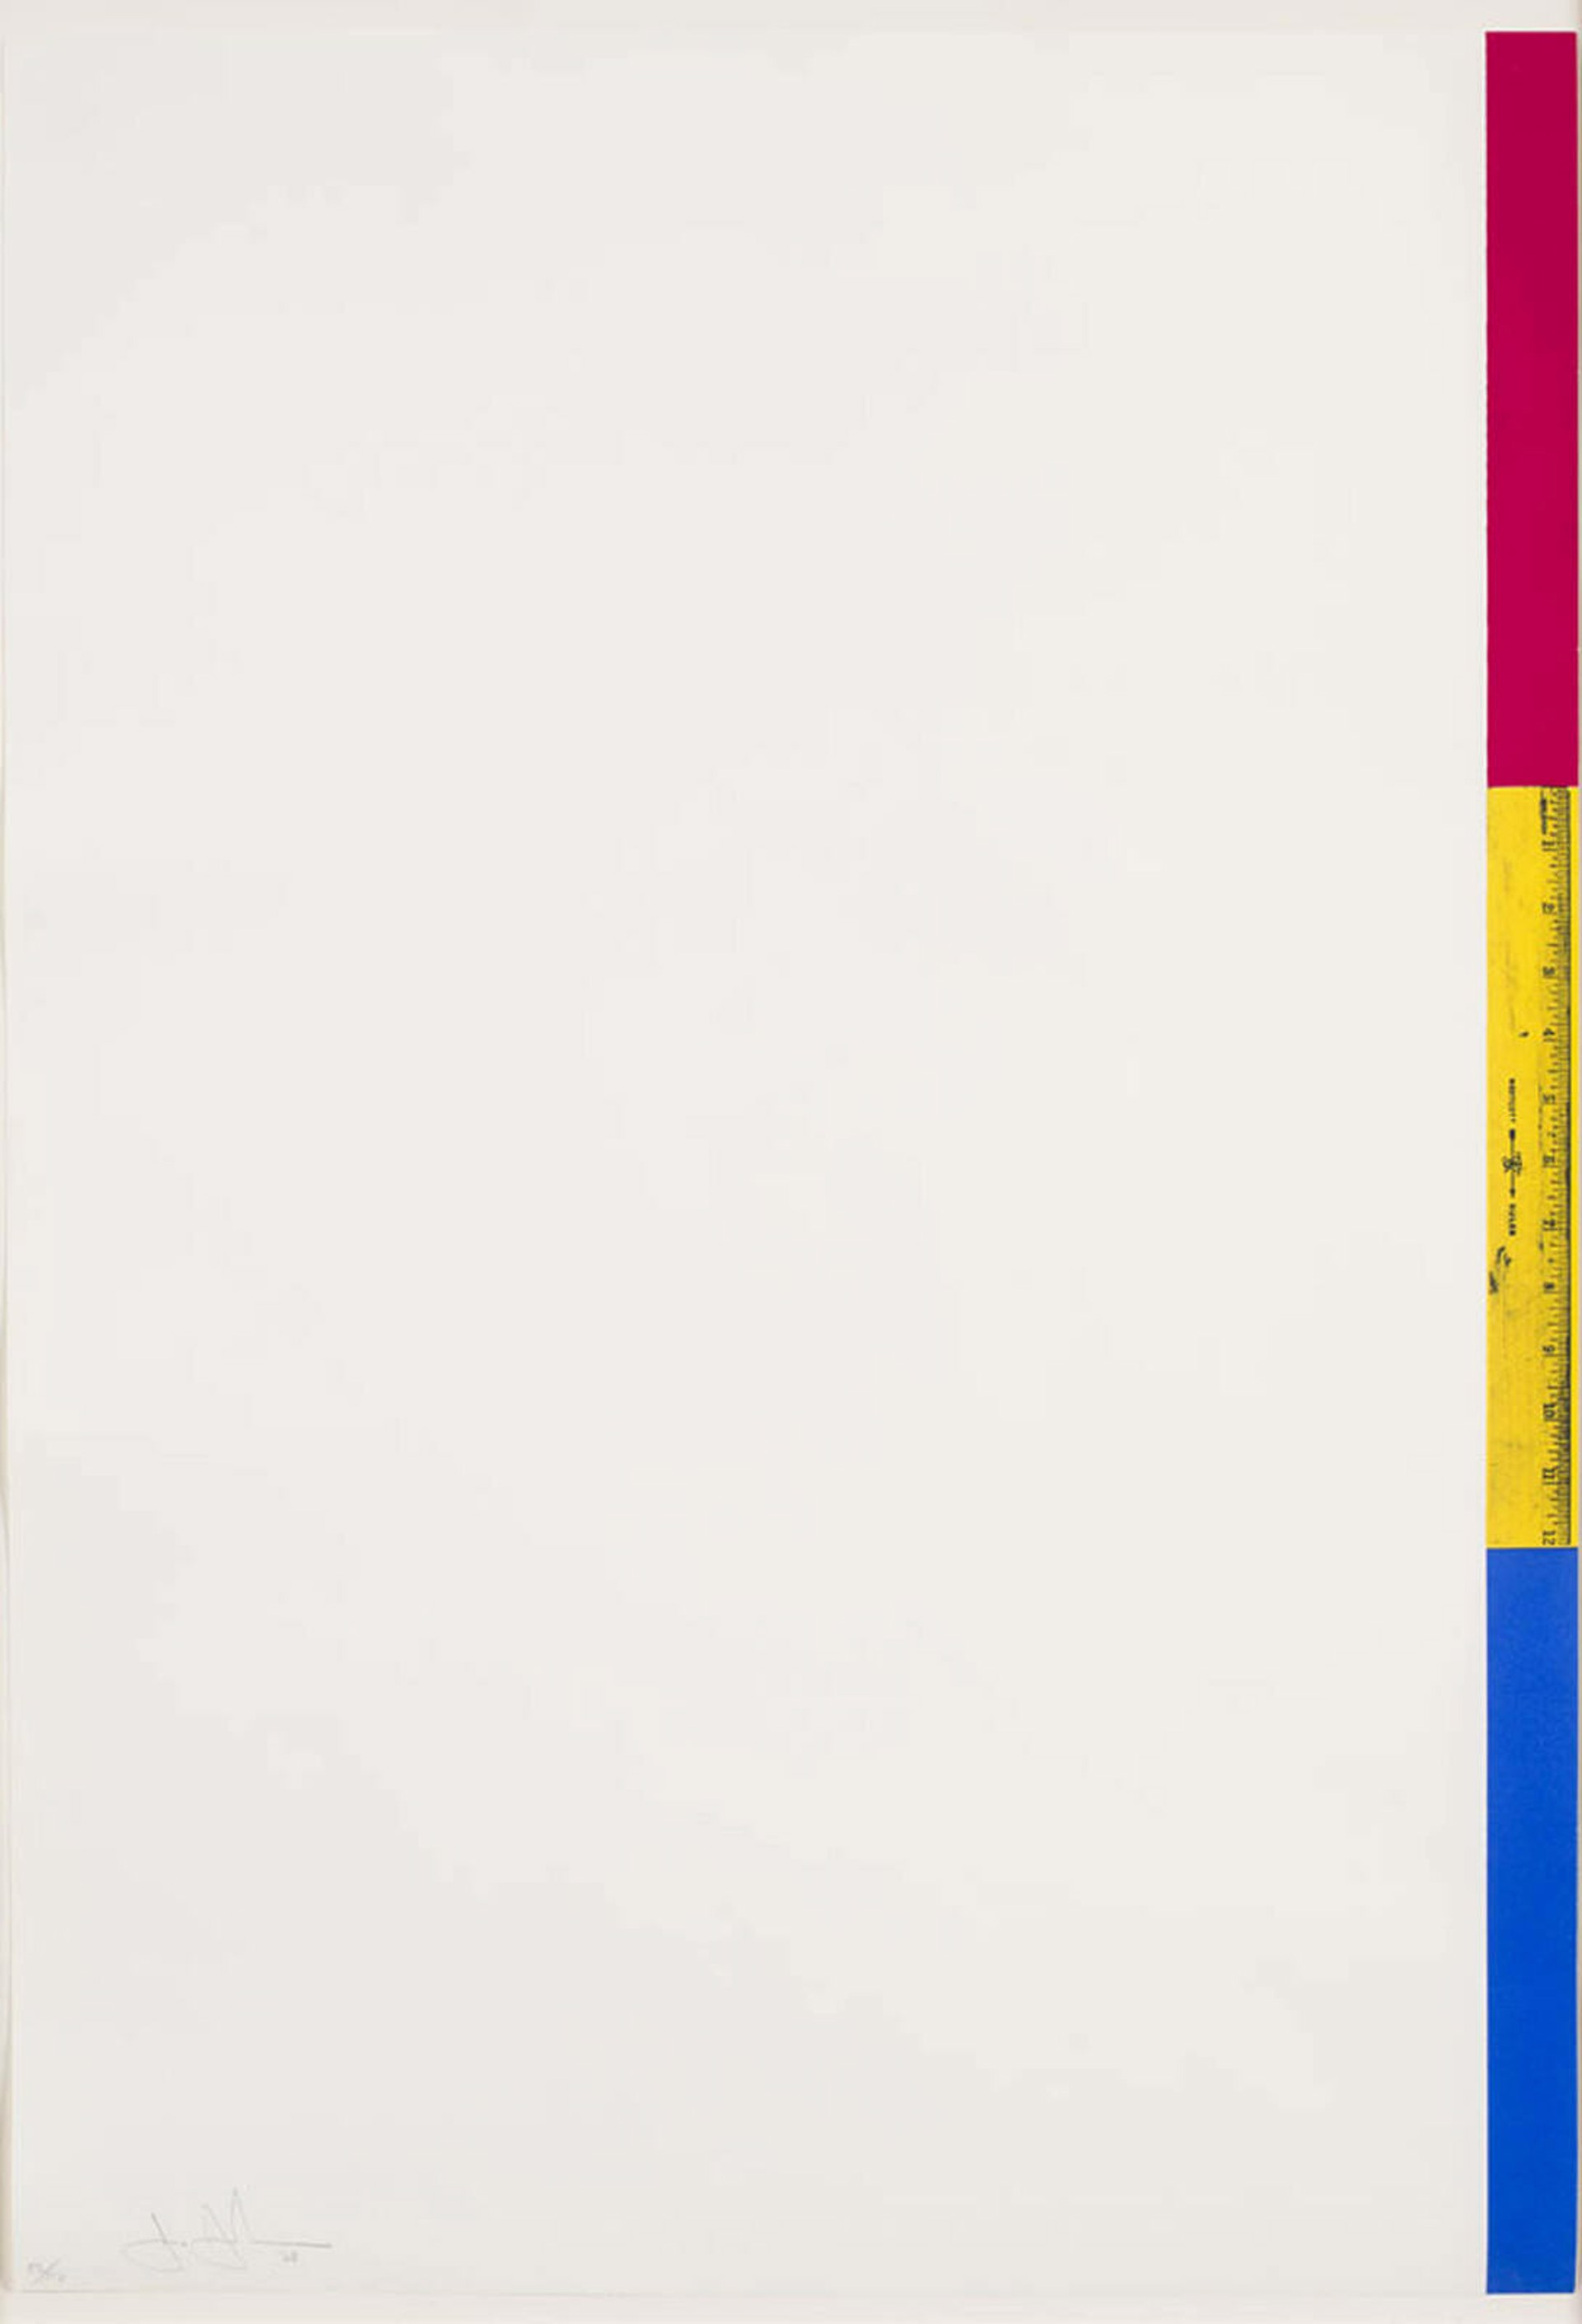 Untitled (Ruler) by Jasper Johns